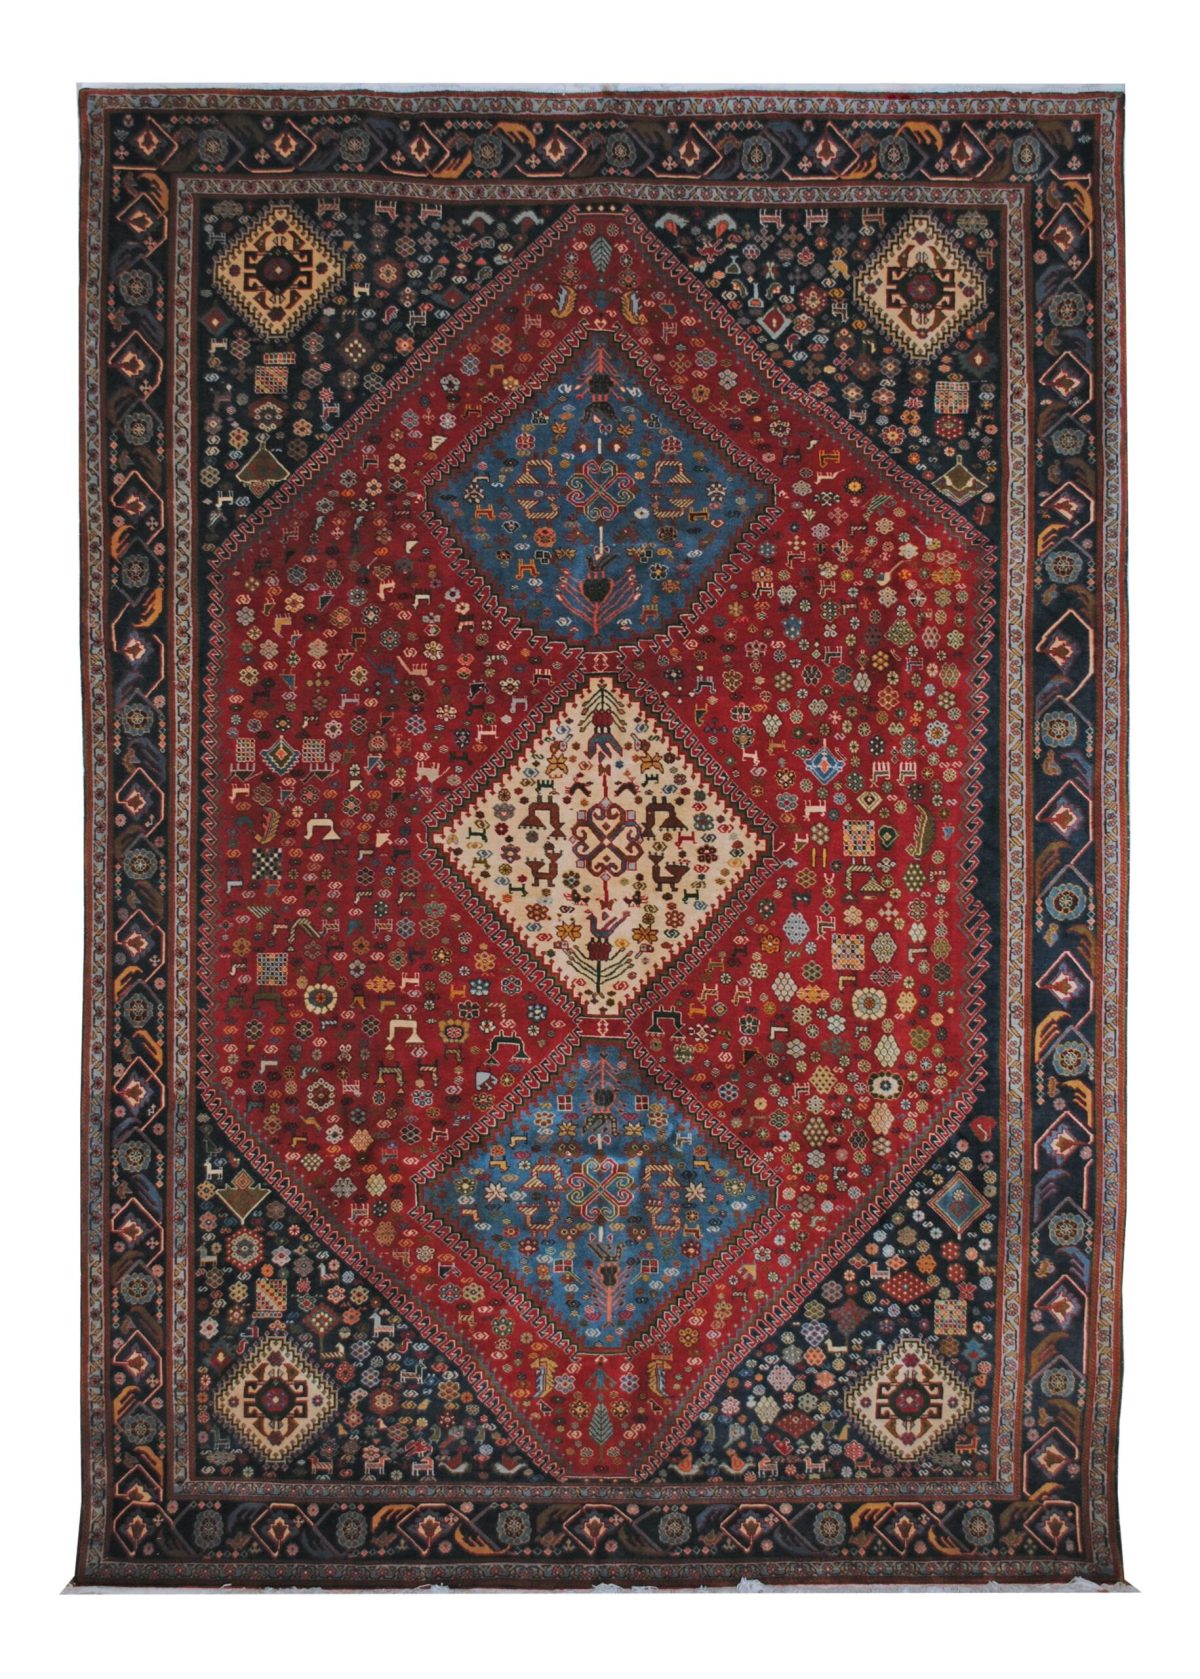 Vintage Persian Ghashghaei 6' 5" x 9' 6" Handmade Wool Area Rug - Shabahang Royal Carpet